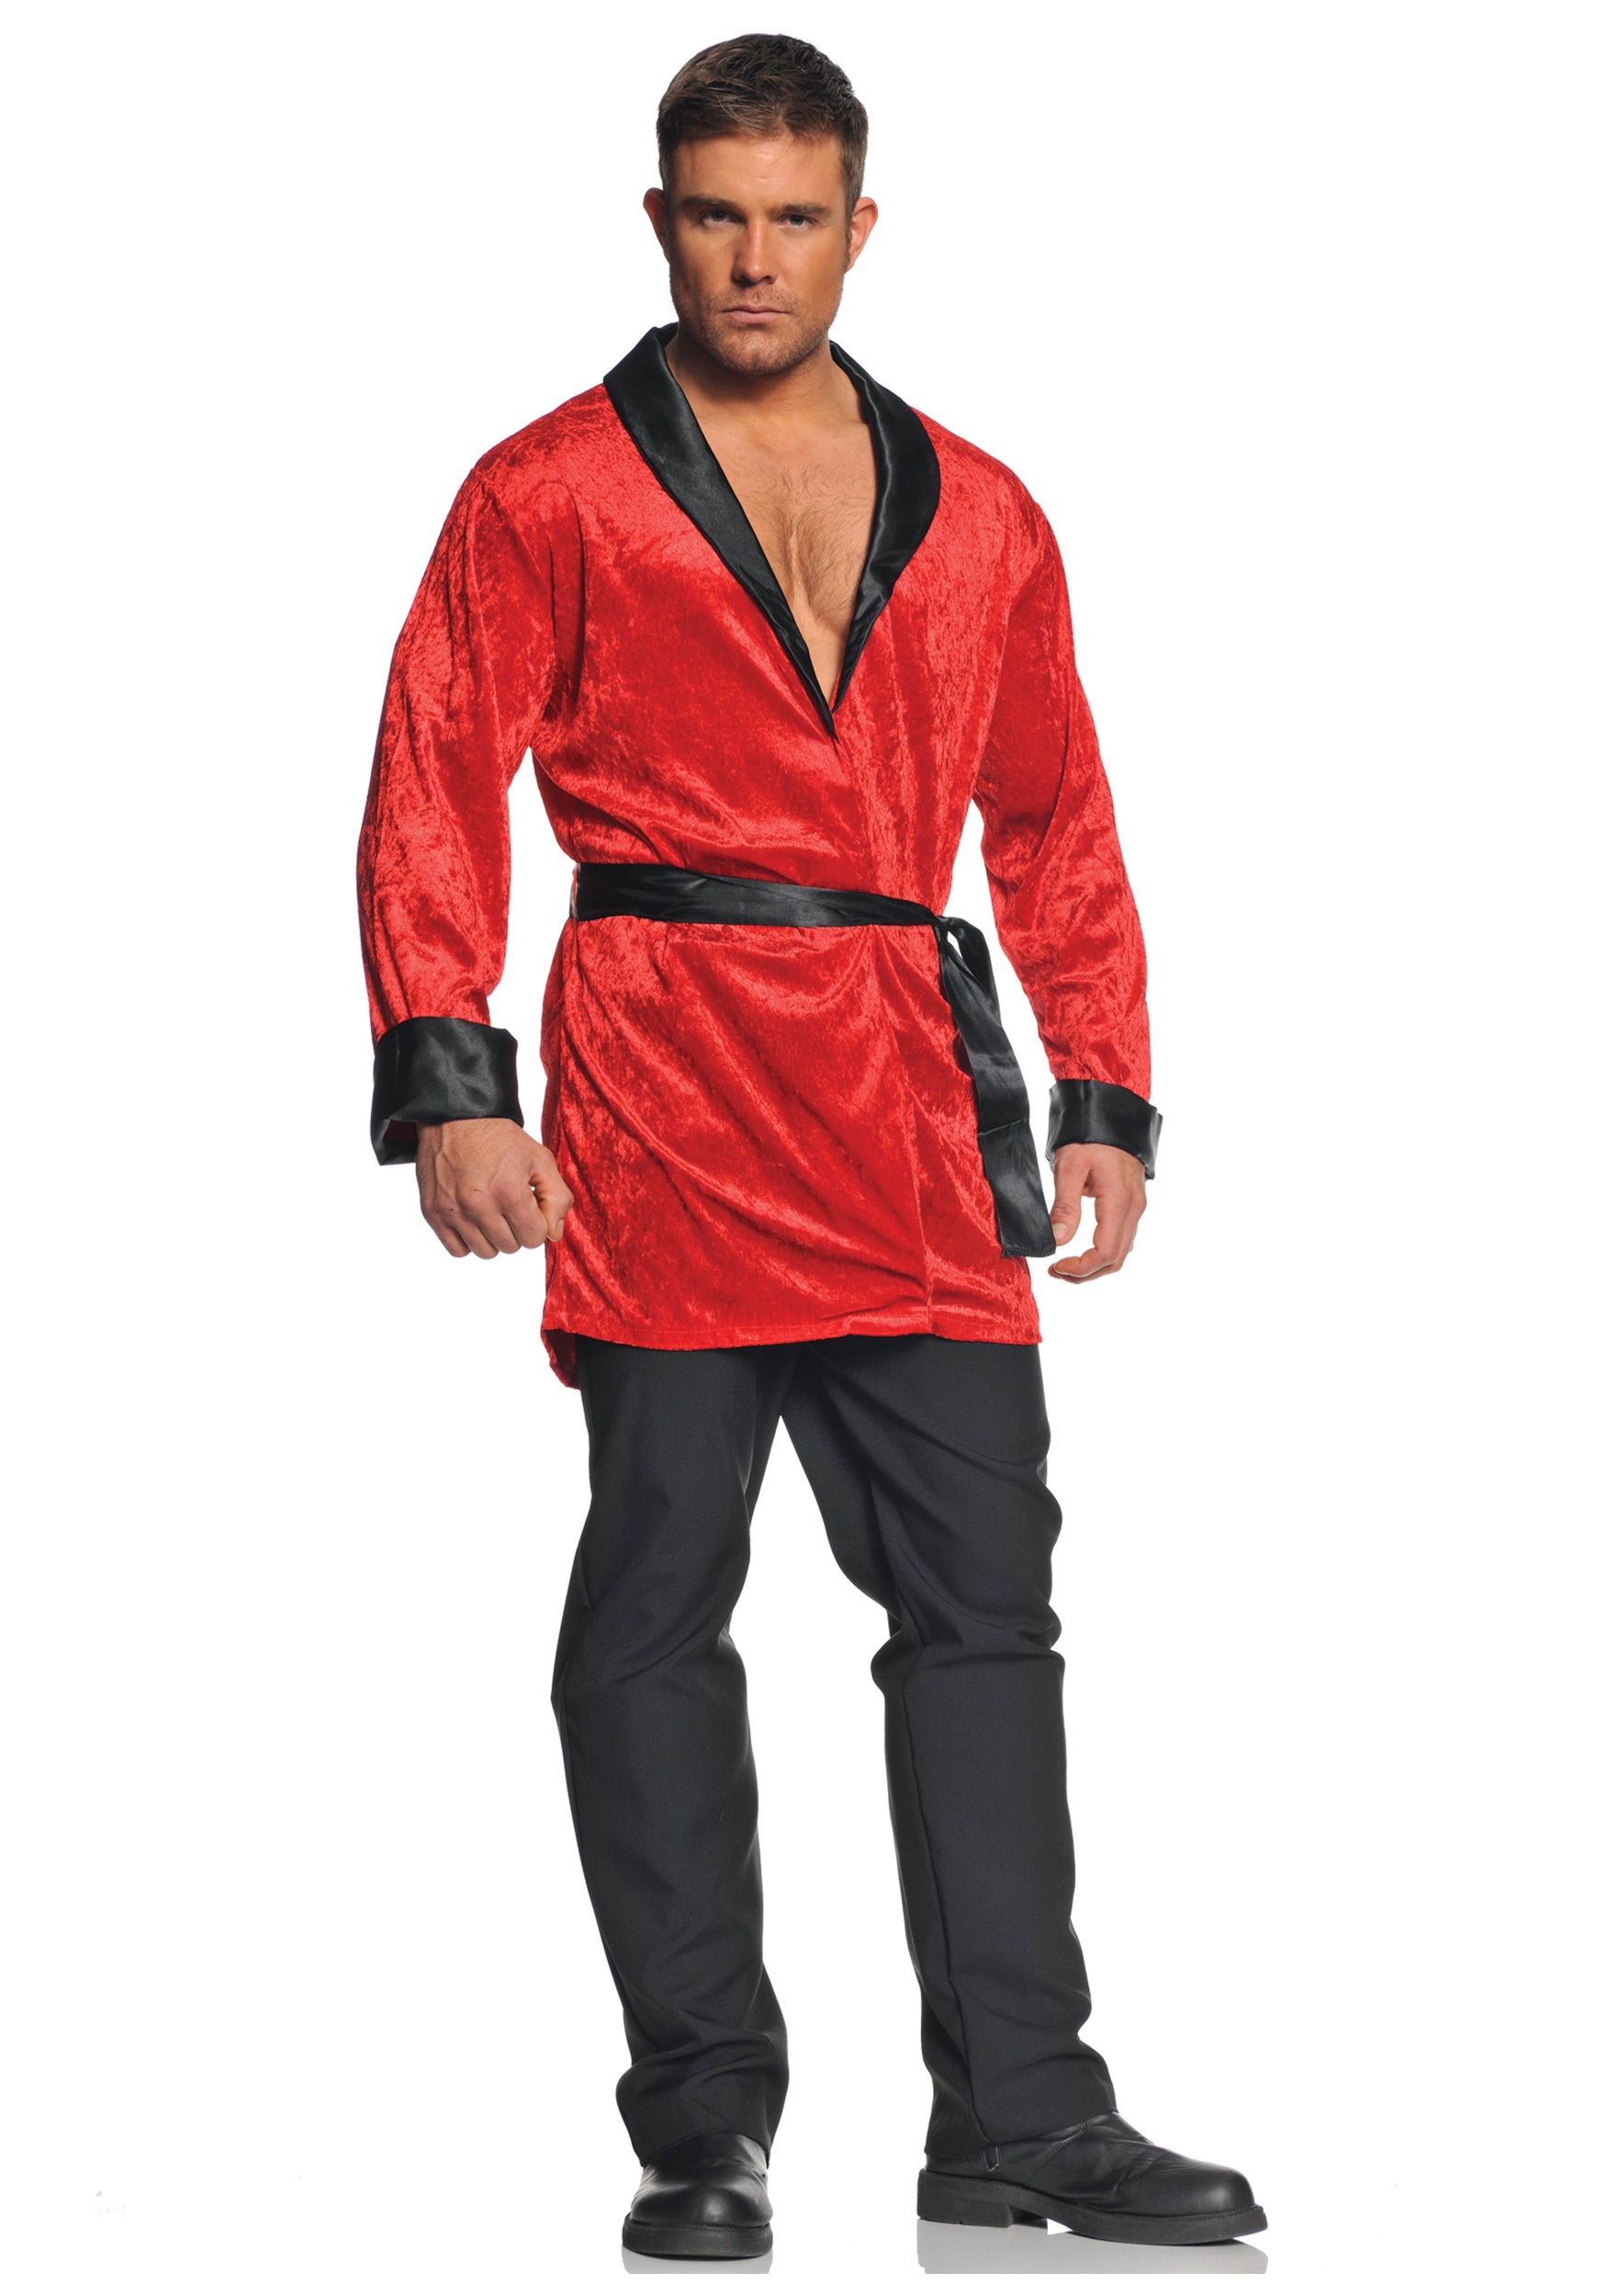 Photos - Fancy Dress Underwraps Men's Smoking Jacket Costume Red